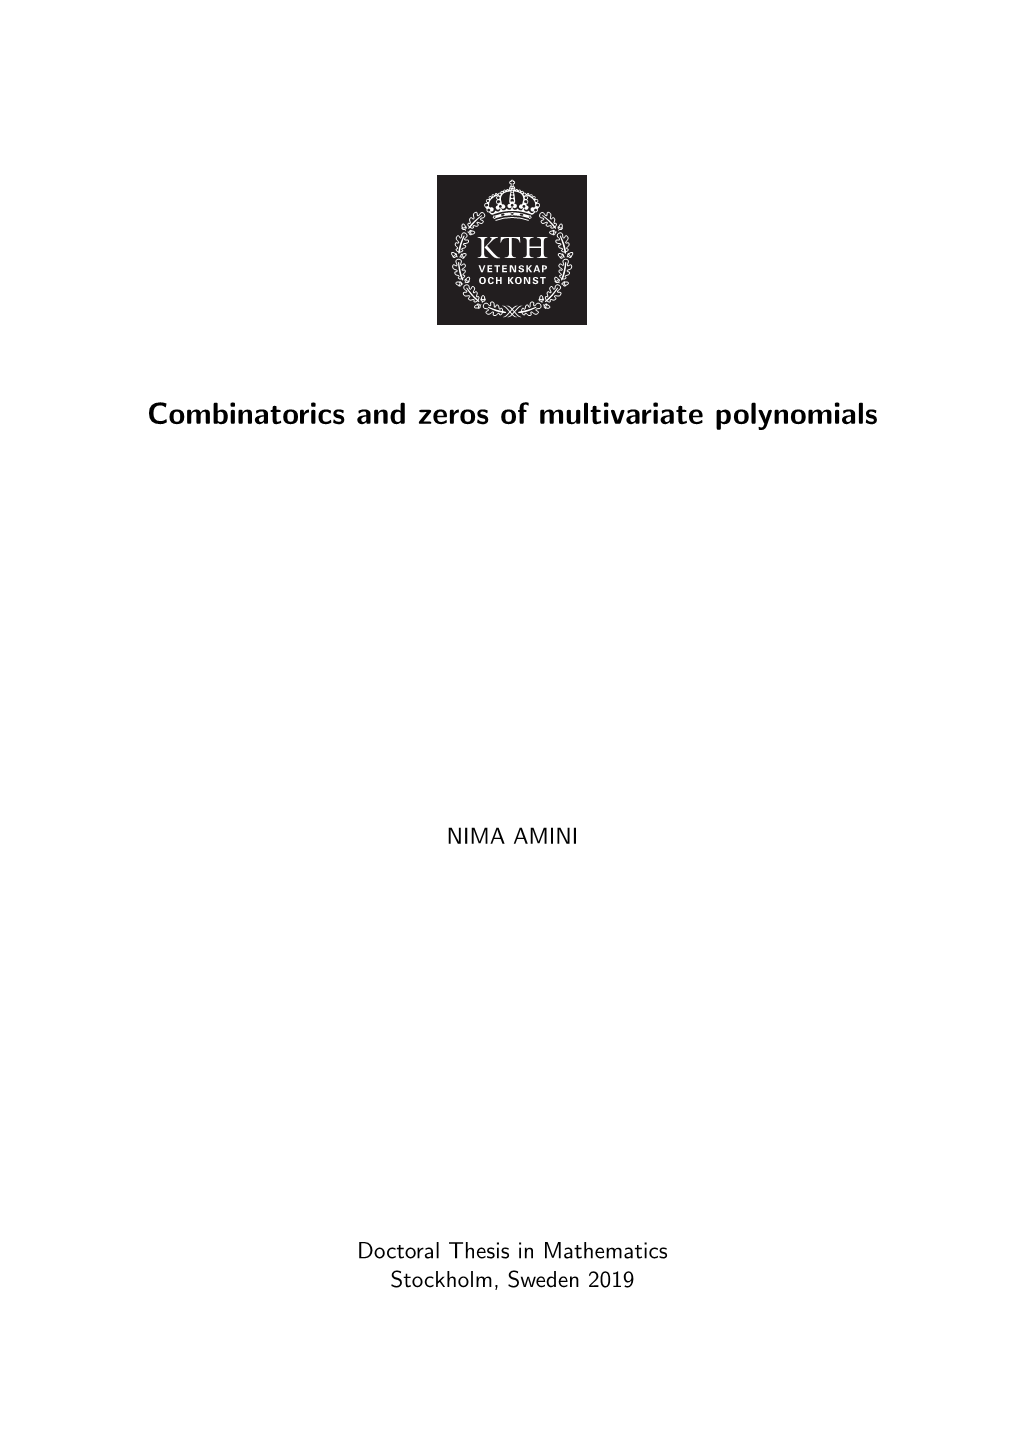 Combinatorics and Zeros of Multivariate Polynomials